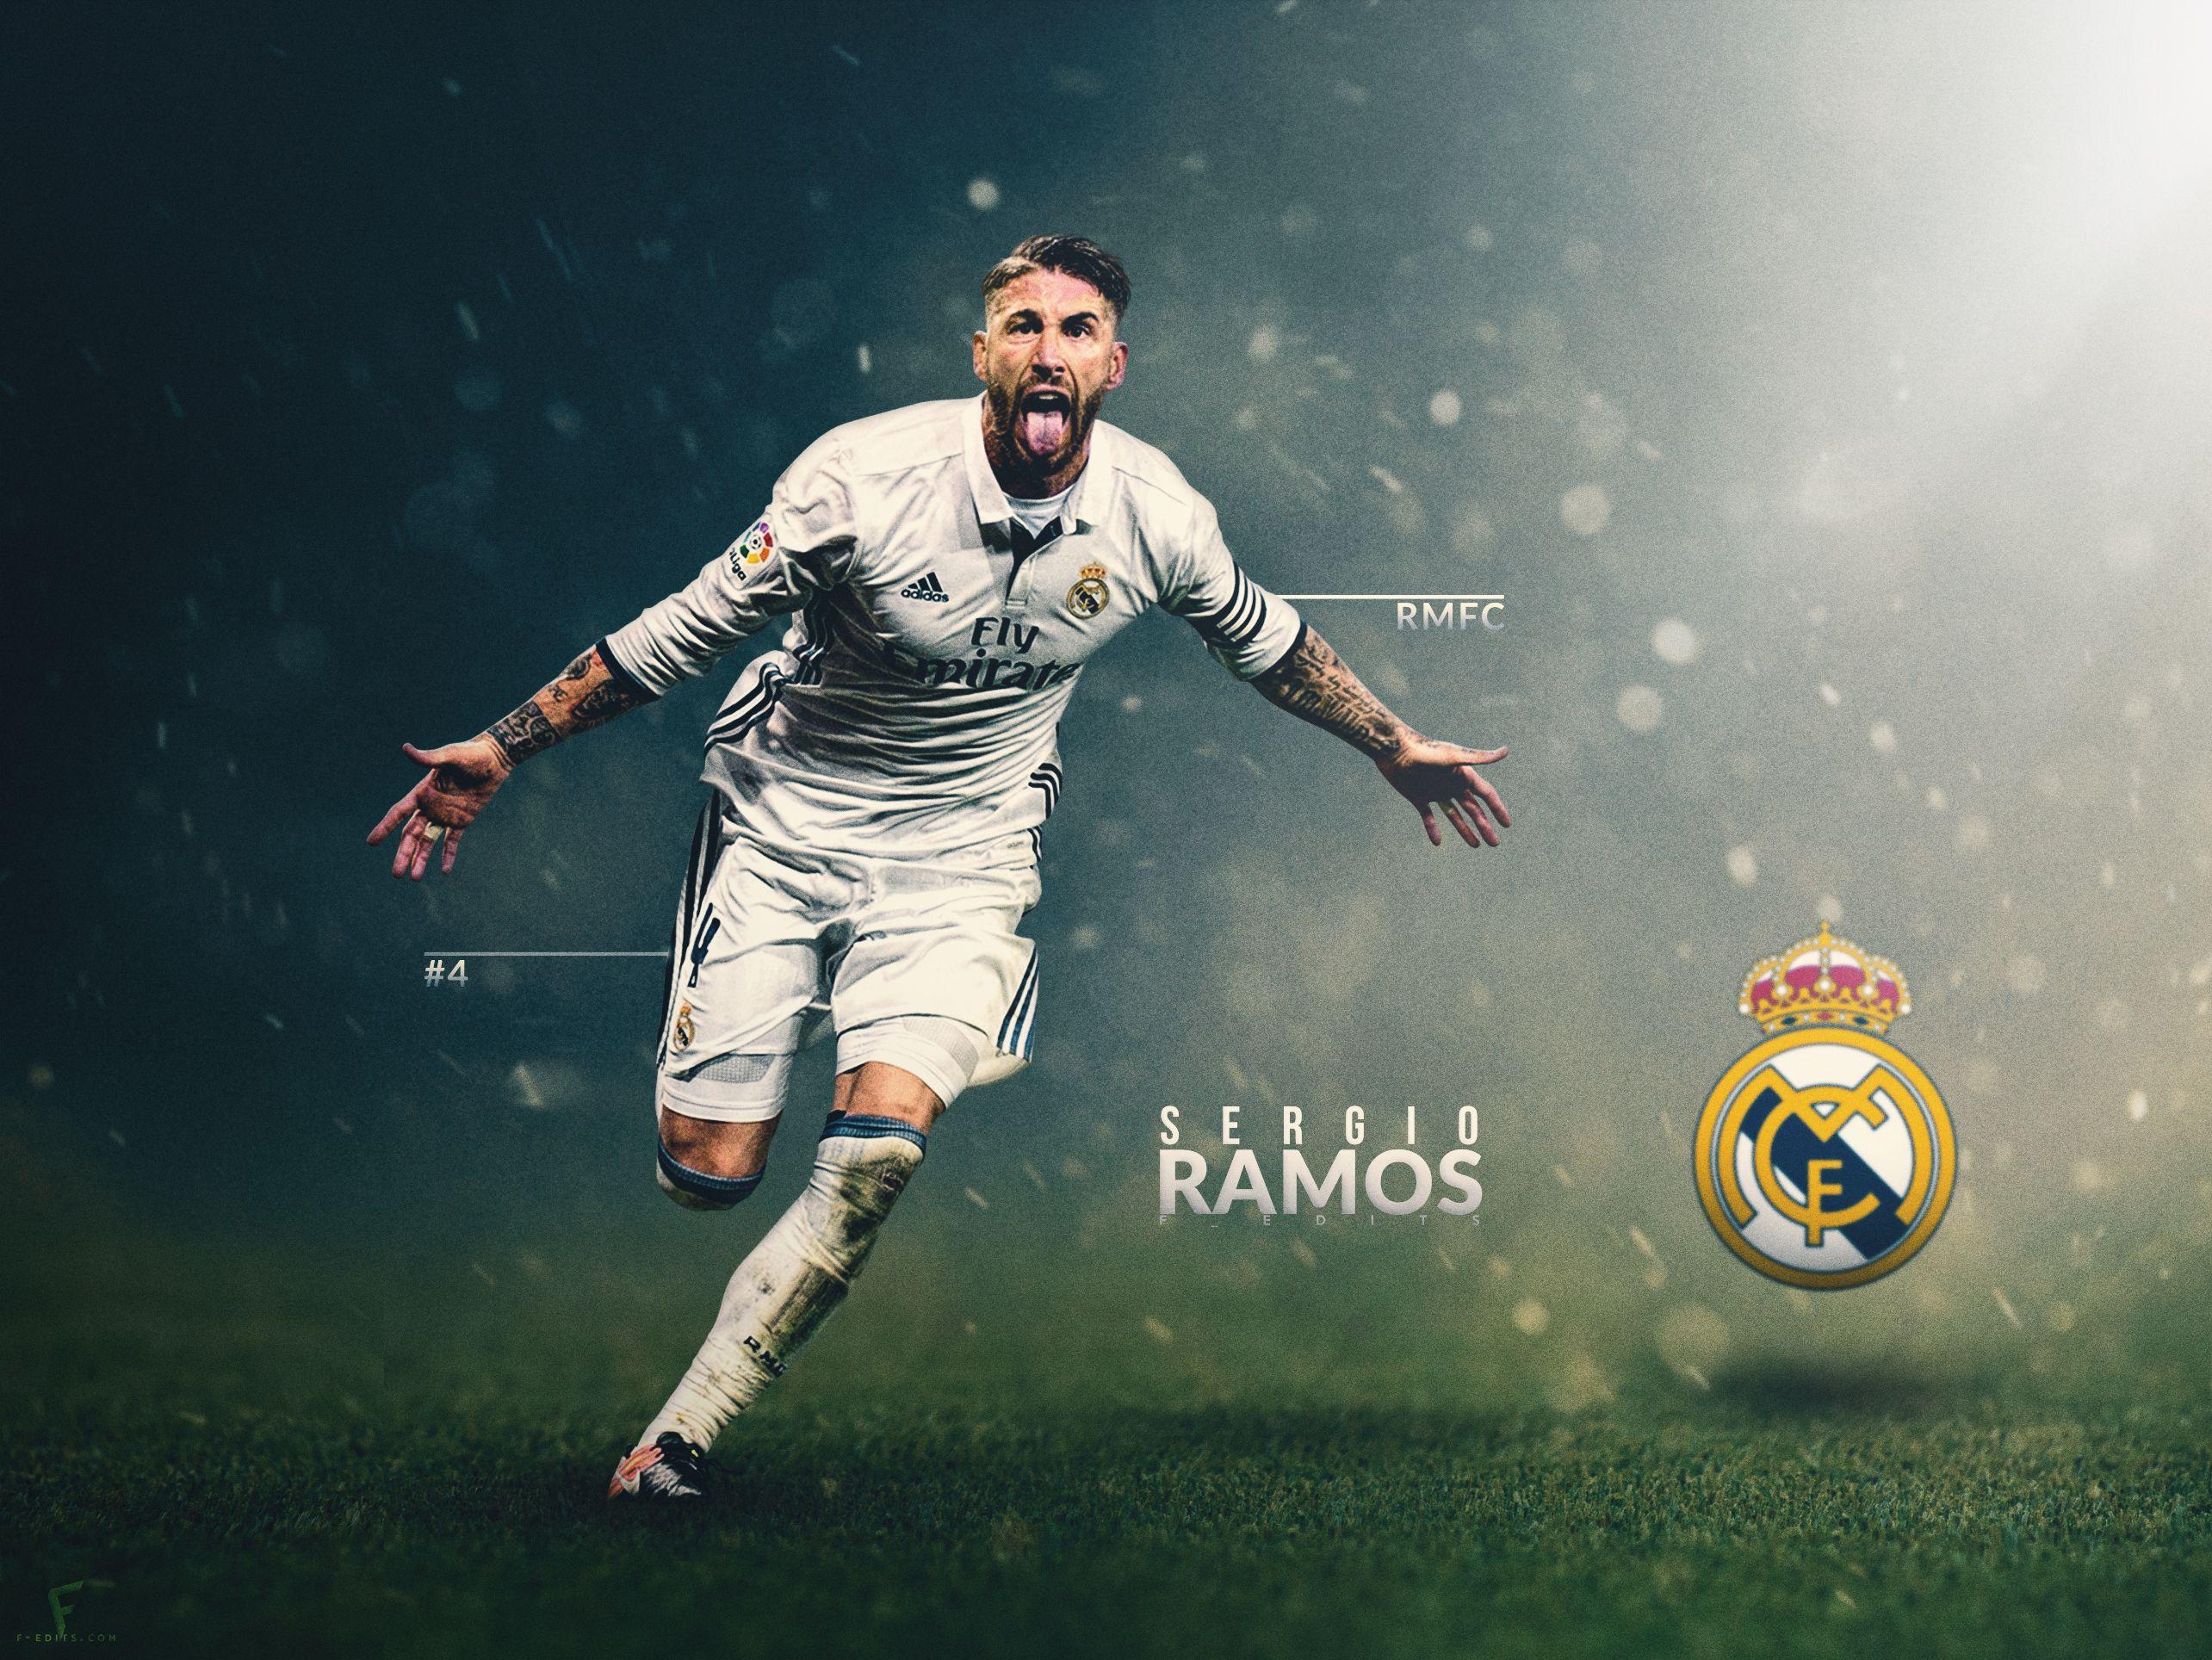 Download Sergio Ramos 2016 Wallpaper HD